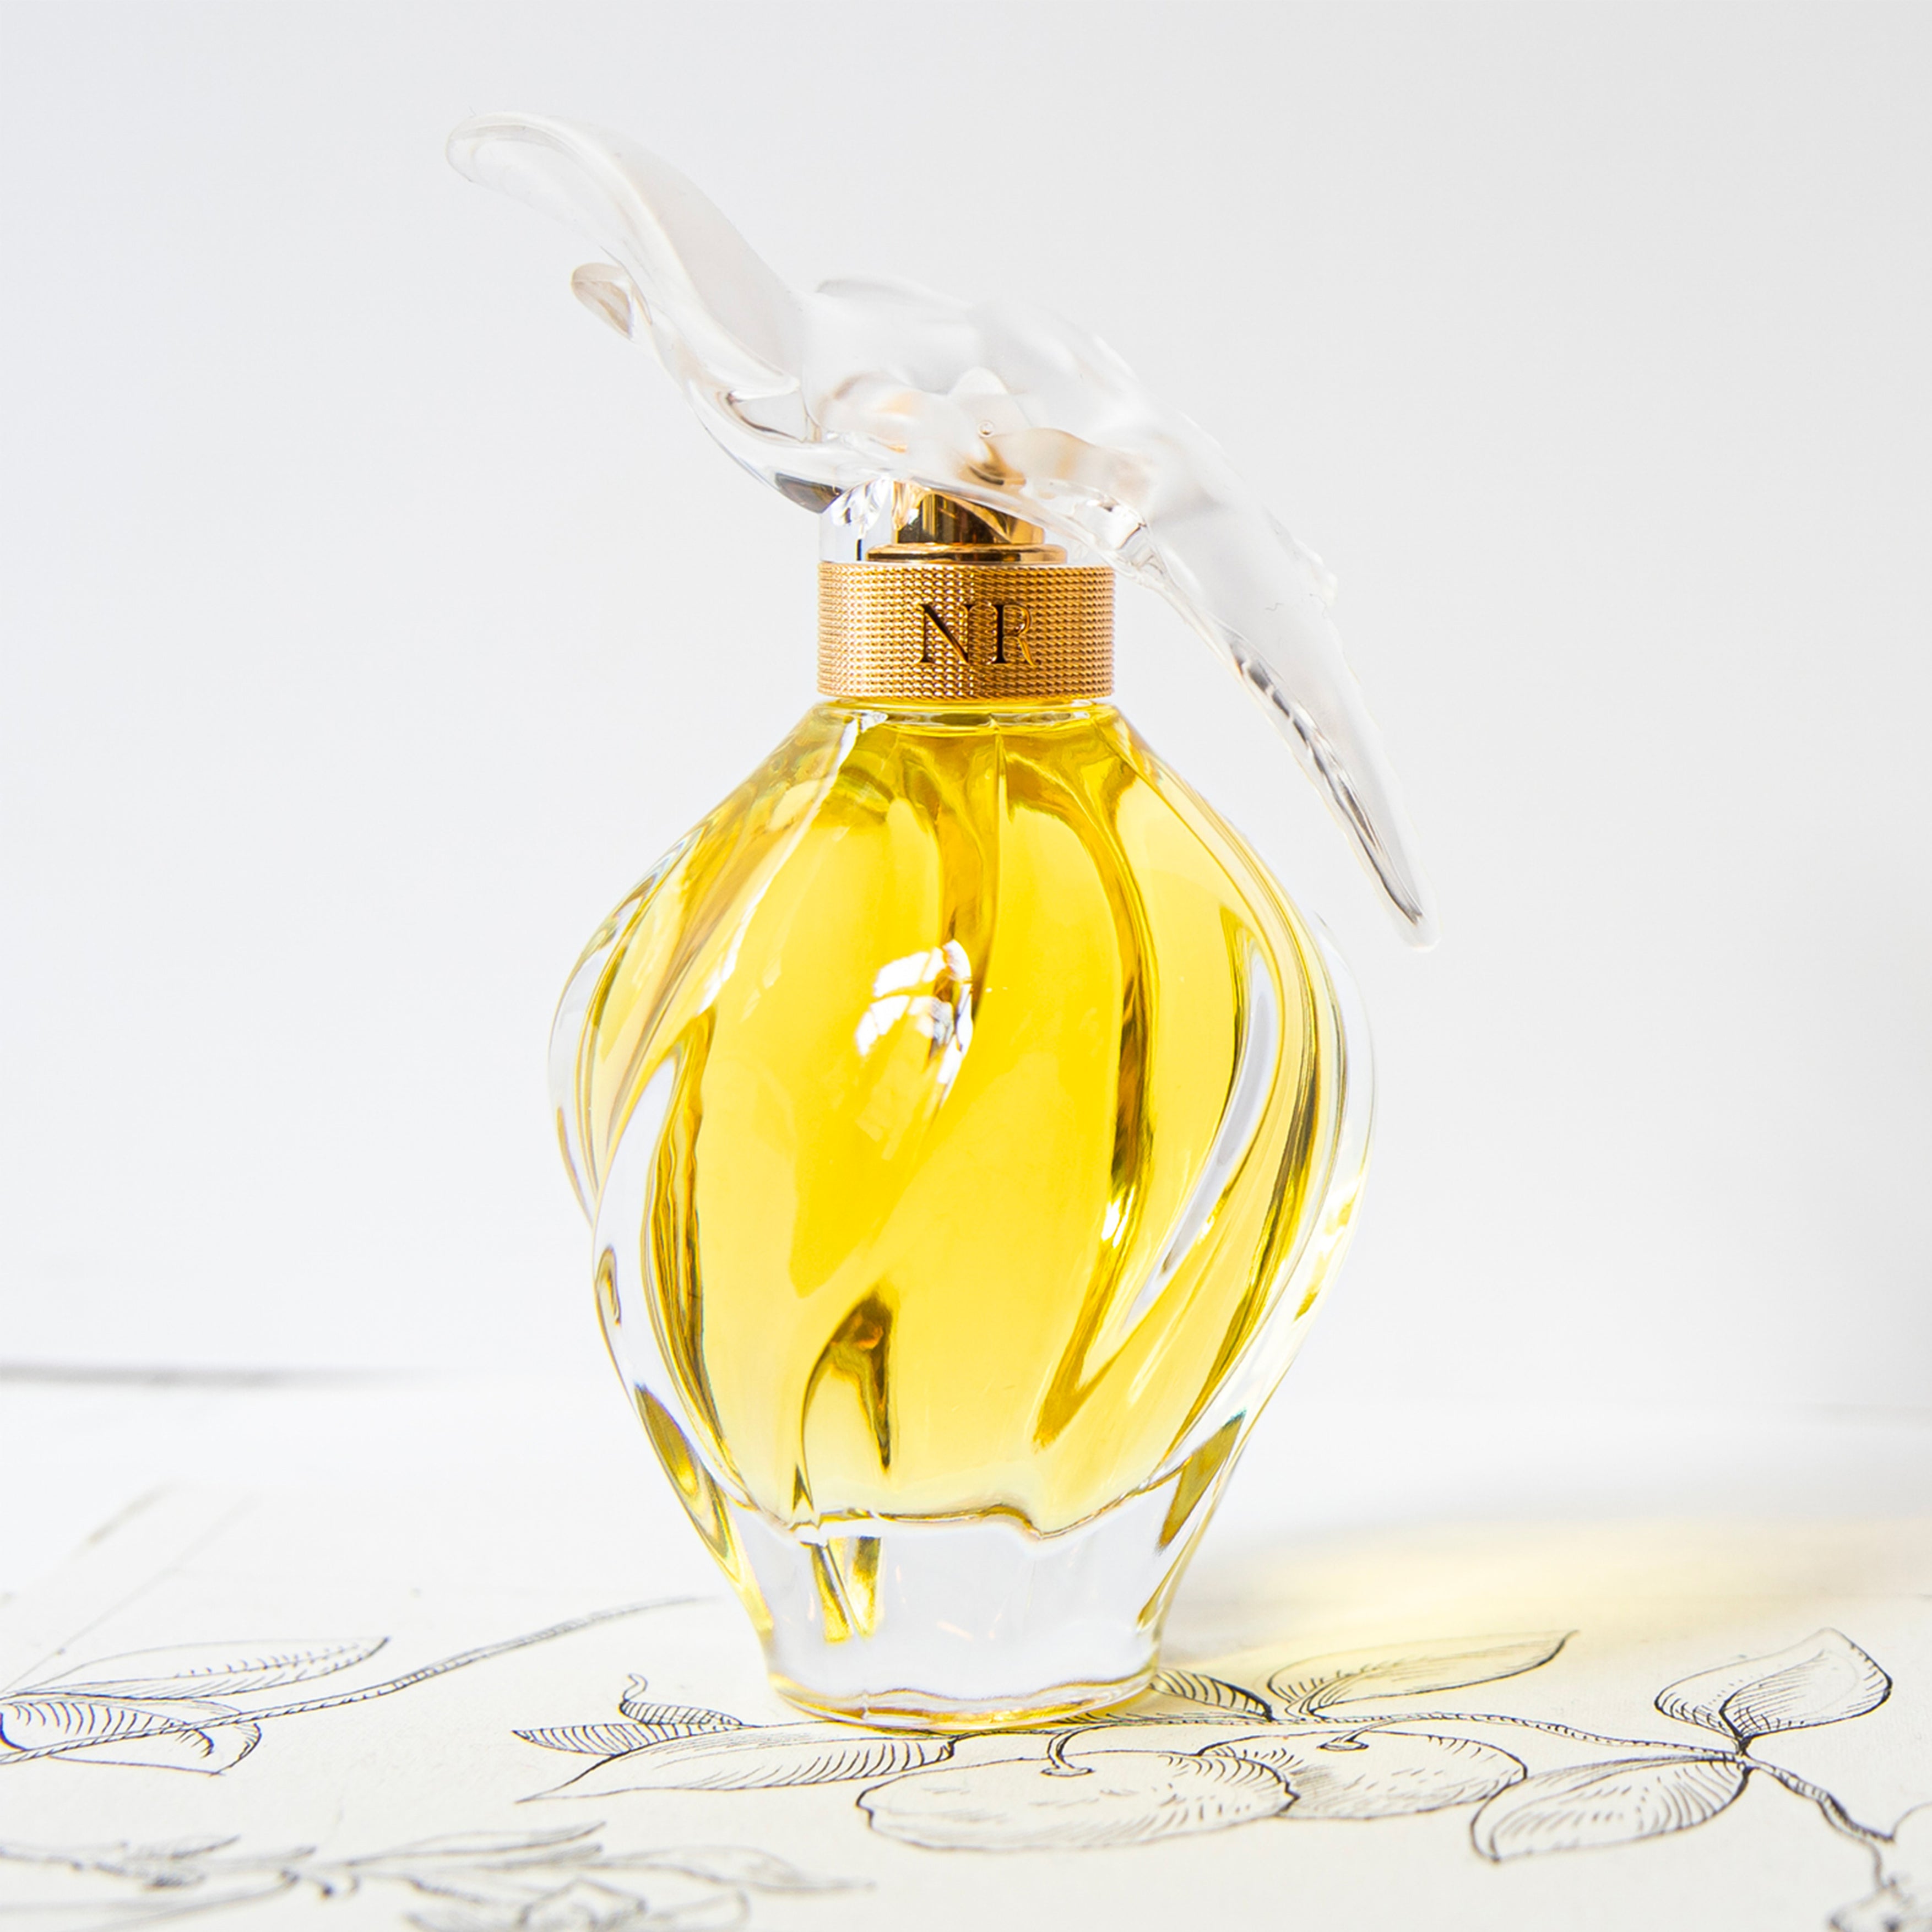 Nina Ricci L'Air Du Temps EDT | My Perfume Shop Australia